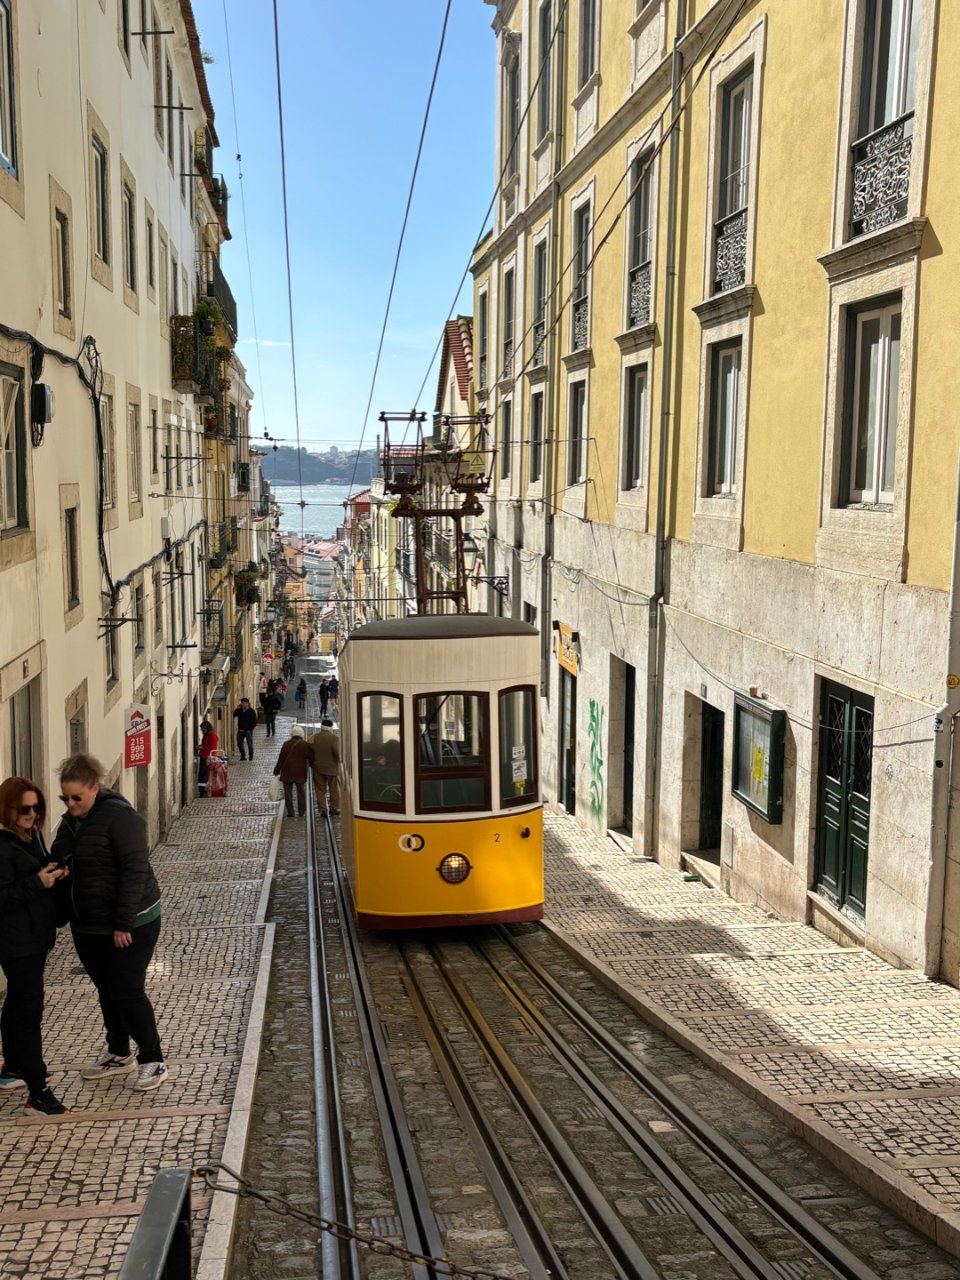 Lisbon之旅🌸